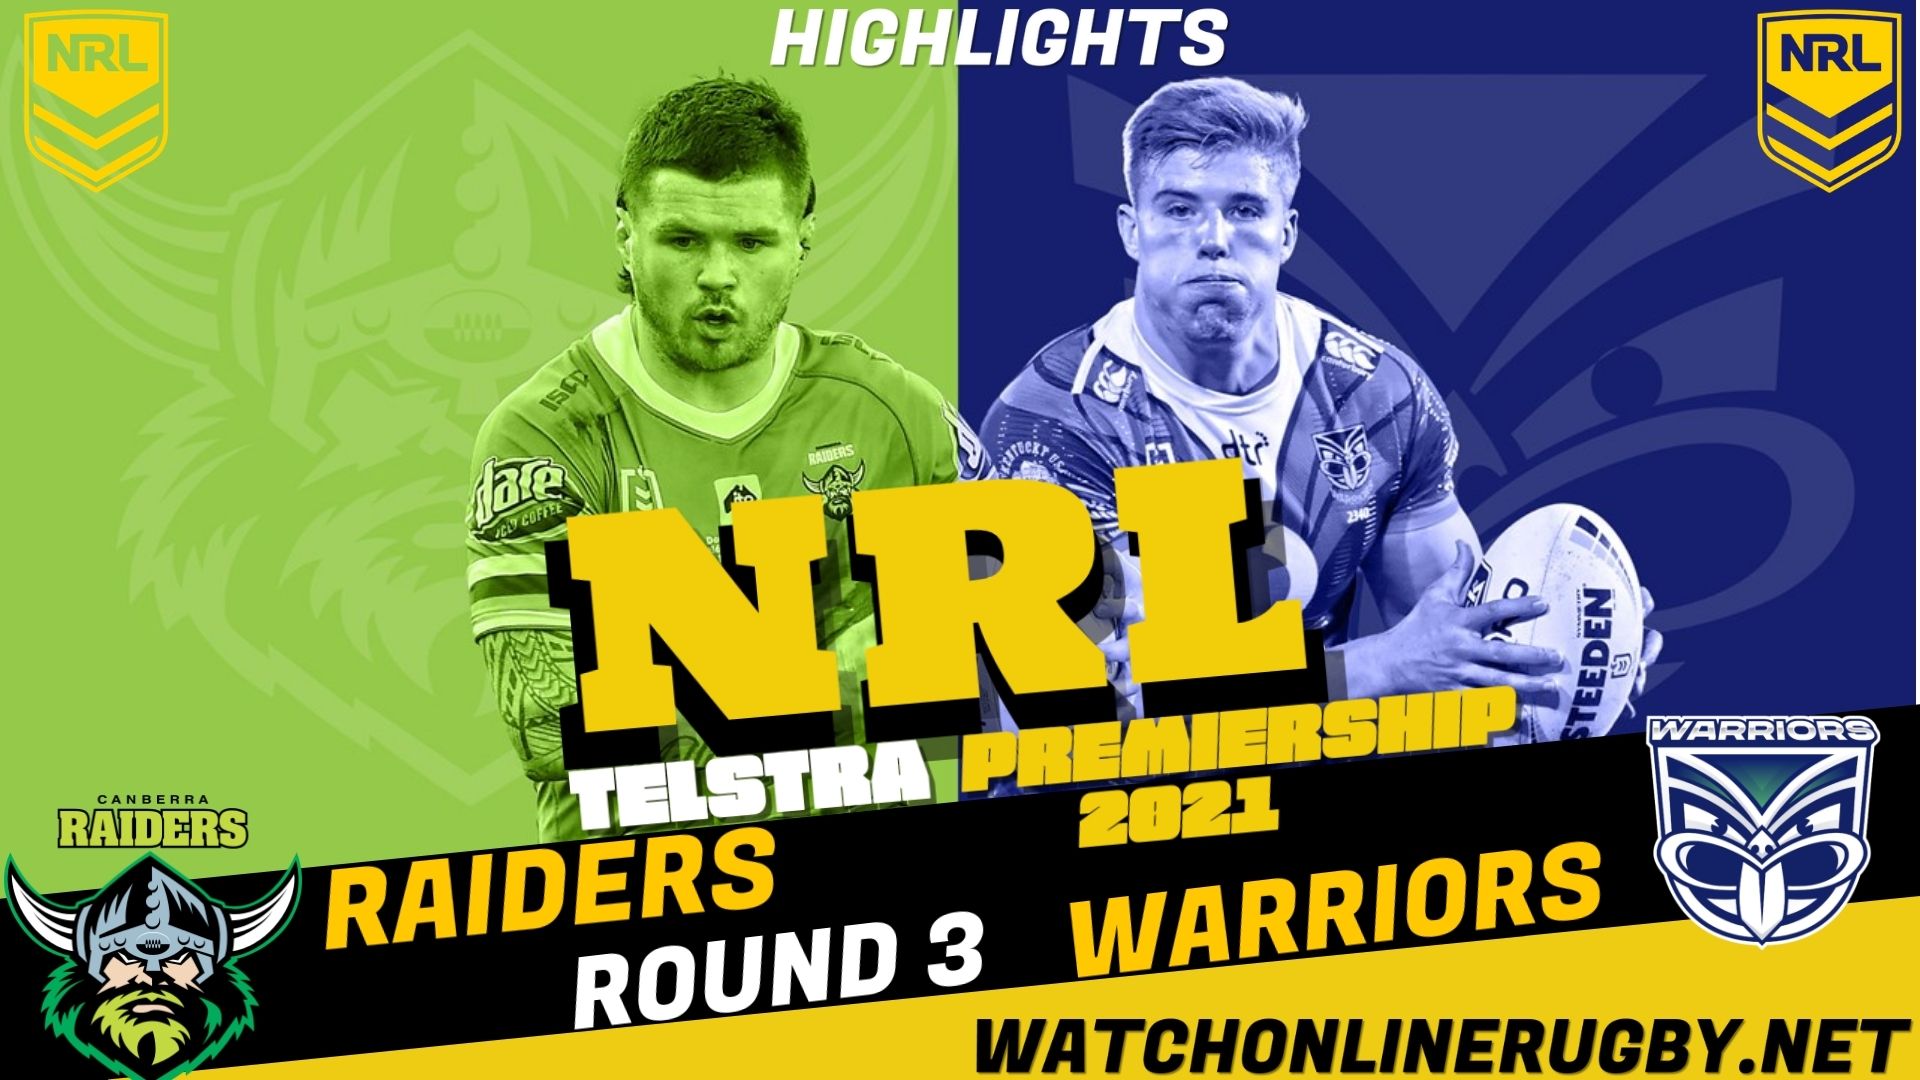 Raiders Vs Warriors Highlights RD 3 NRL Rugby